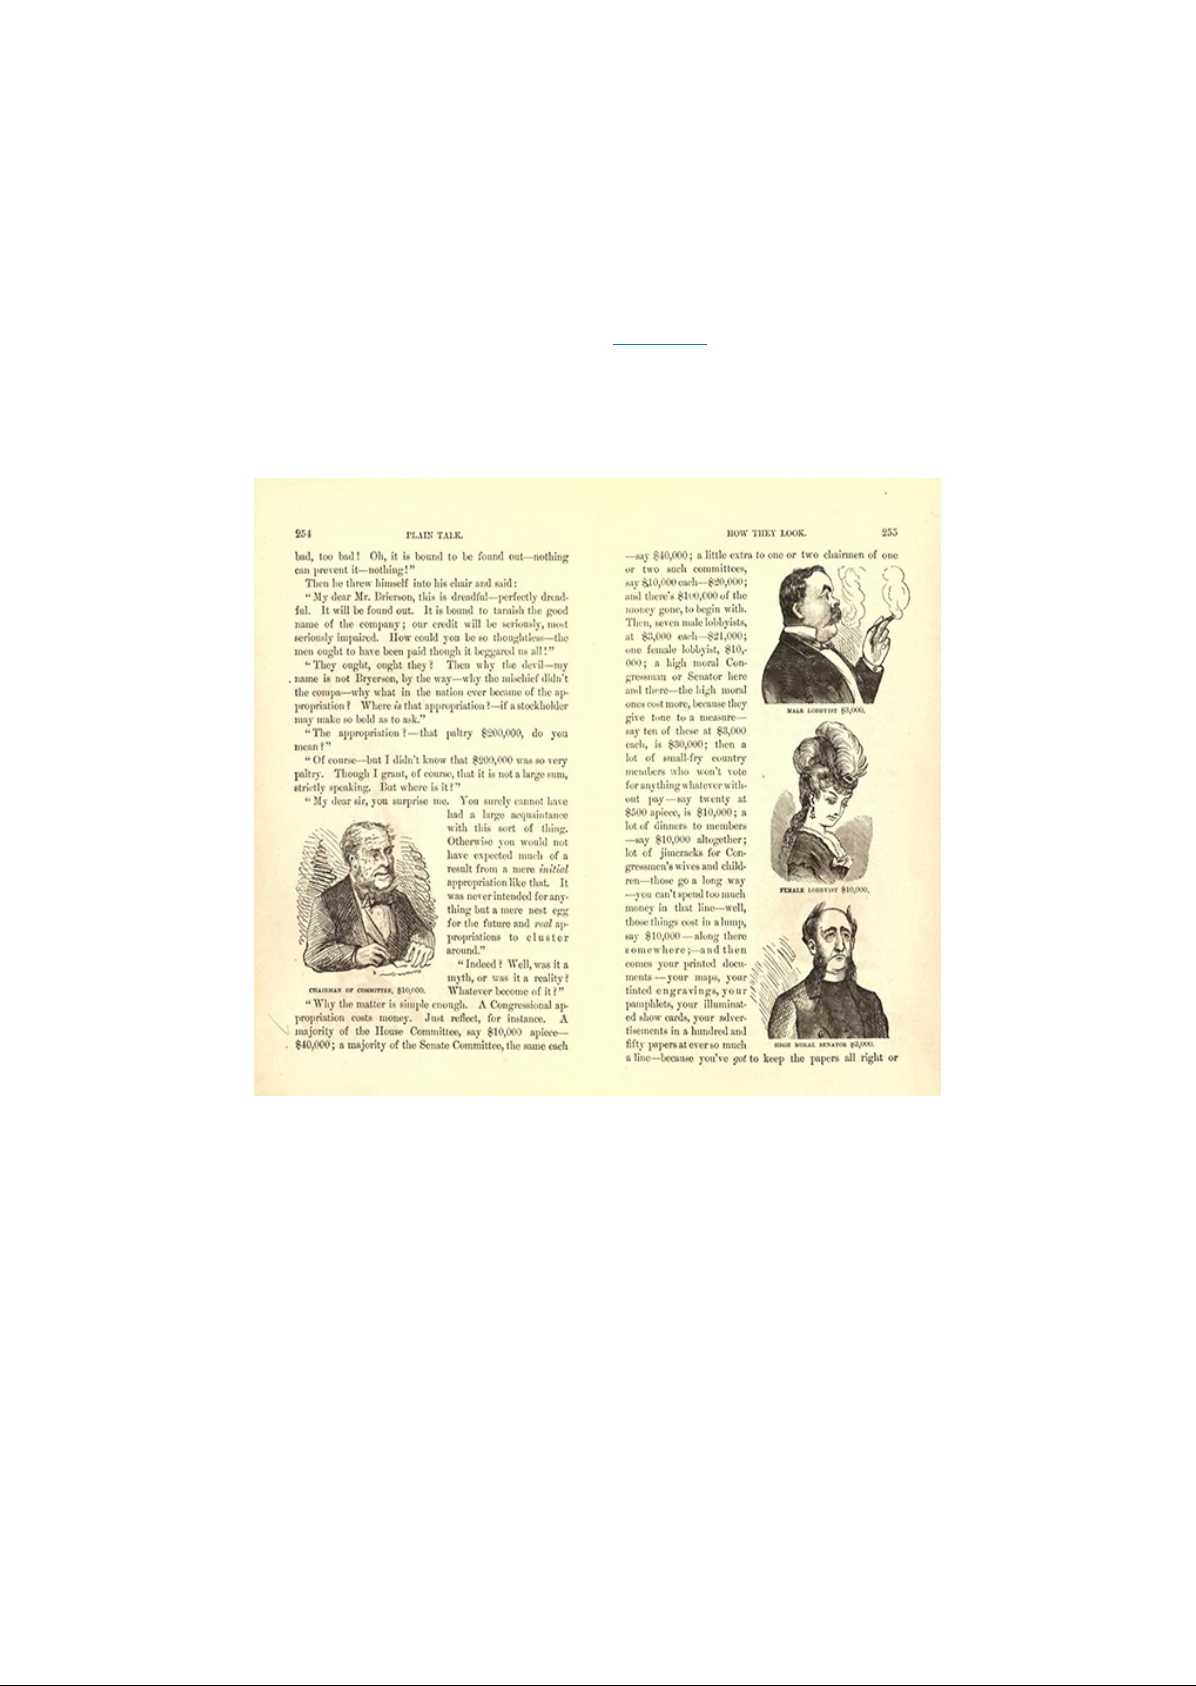 Politics_in_the_Gilded_Age_1870-1900 PDF Download